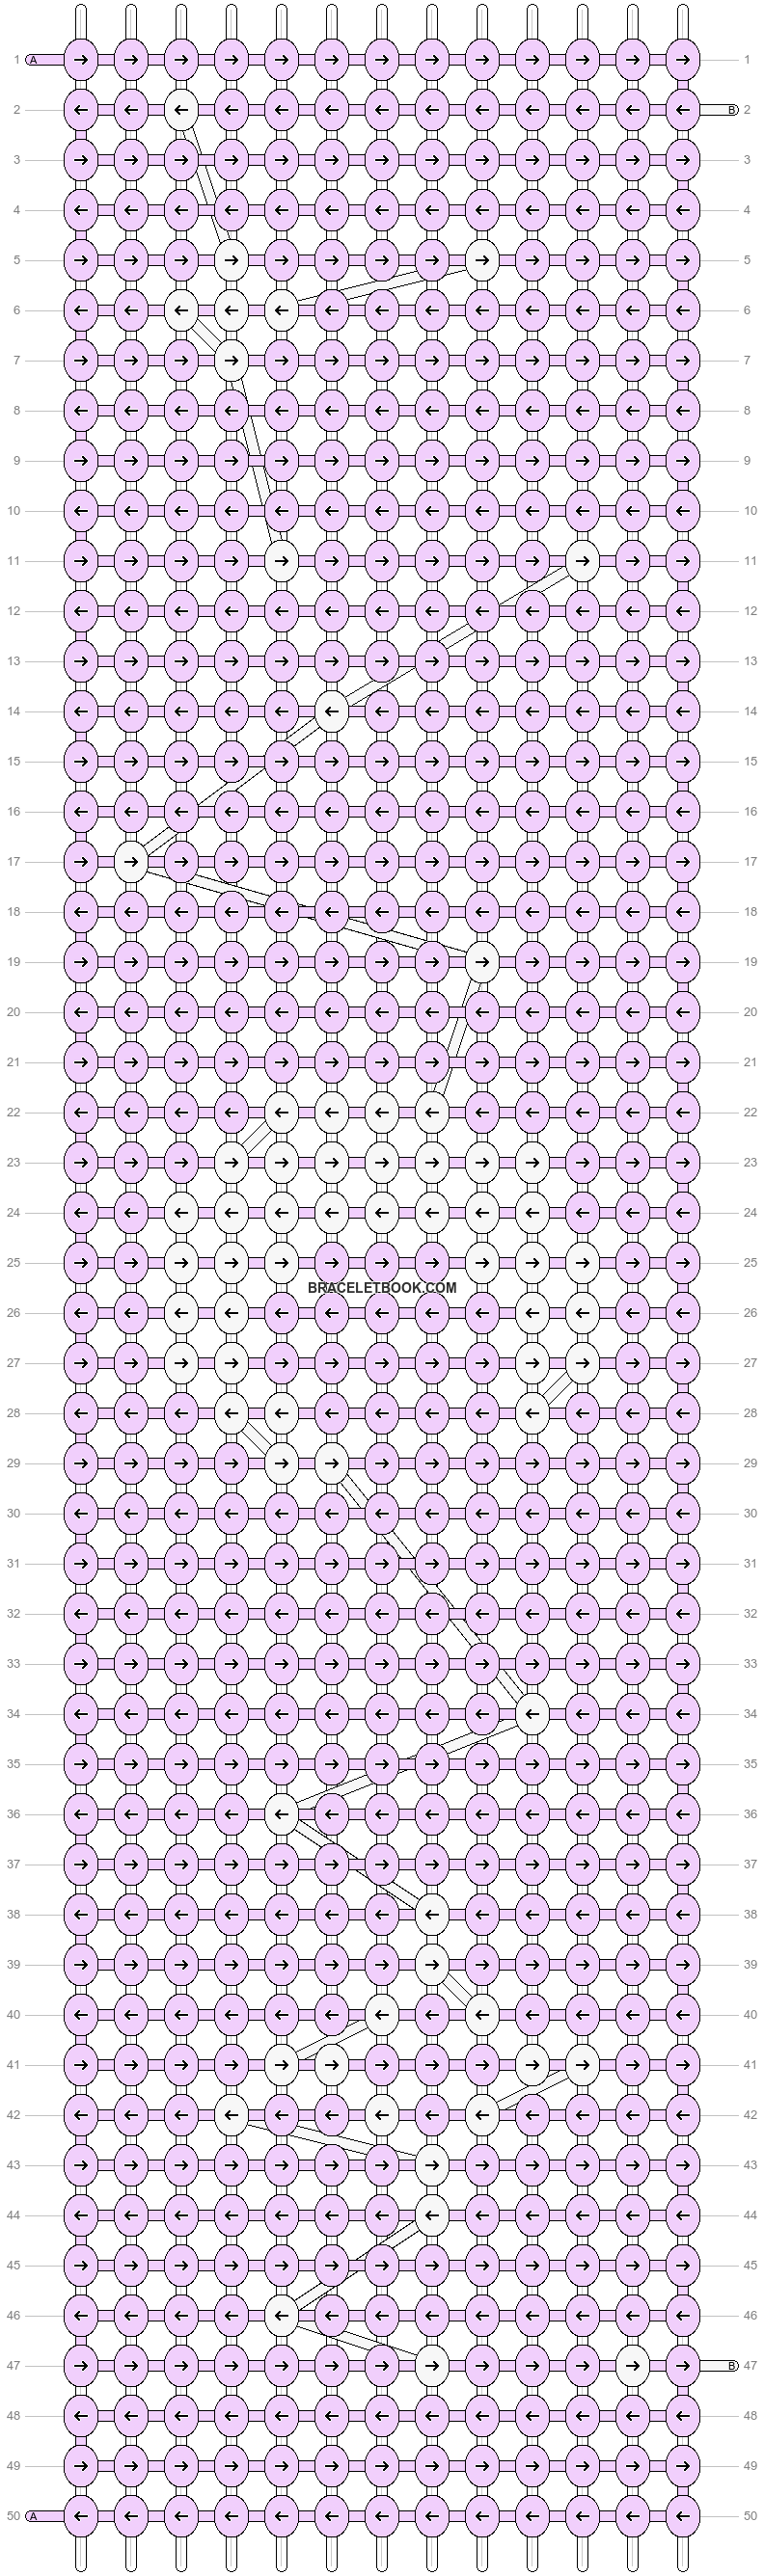 Alpha pattern #57316 variation #110991 pattern